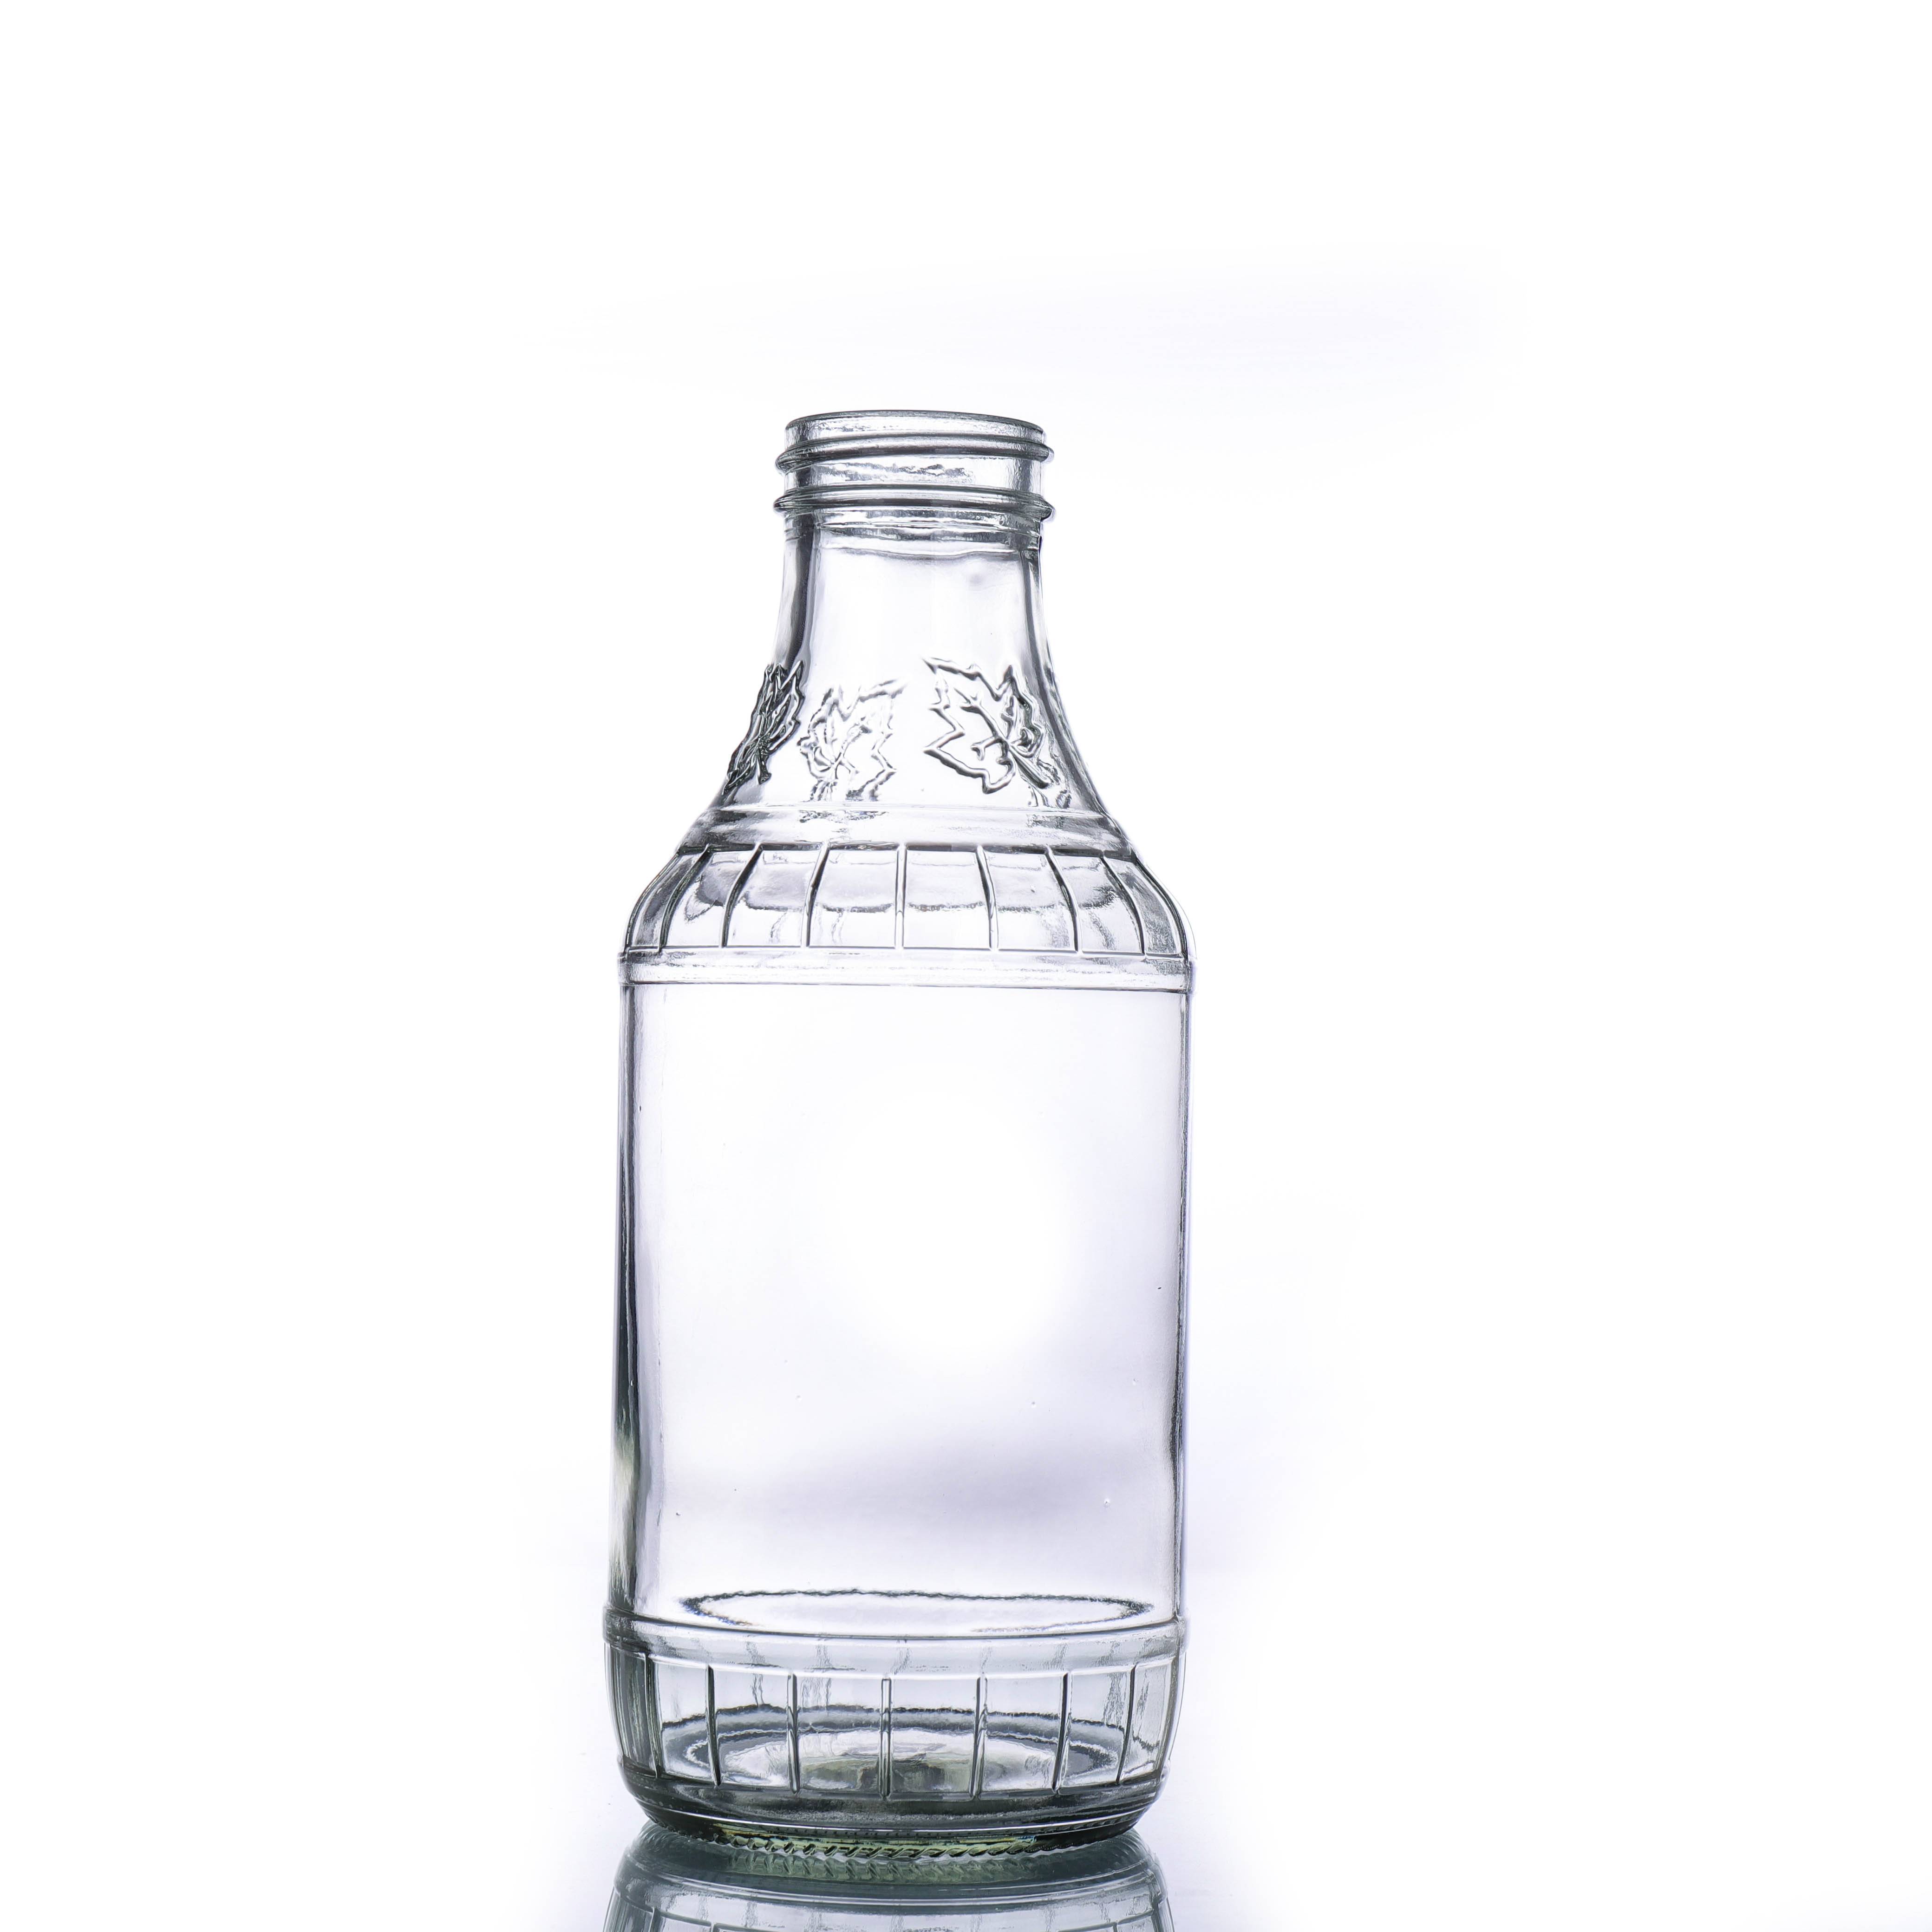 Igo gilasi Igo Gbona Gbona Factory Kekere - 16oz Clear Glass Decanter Bottle with 38mm lug finish – Ant Glass